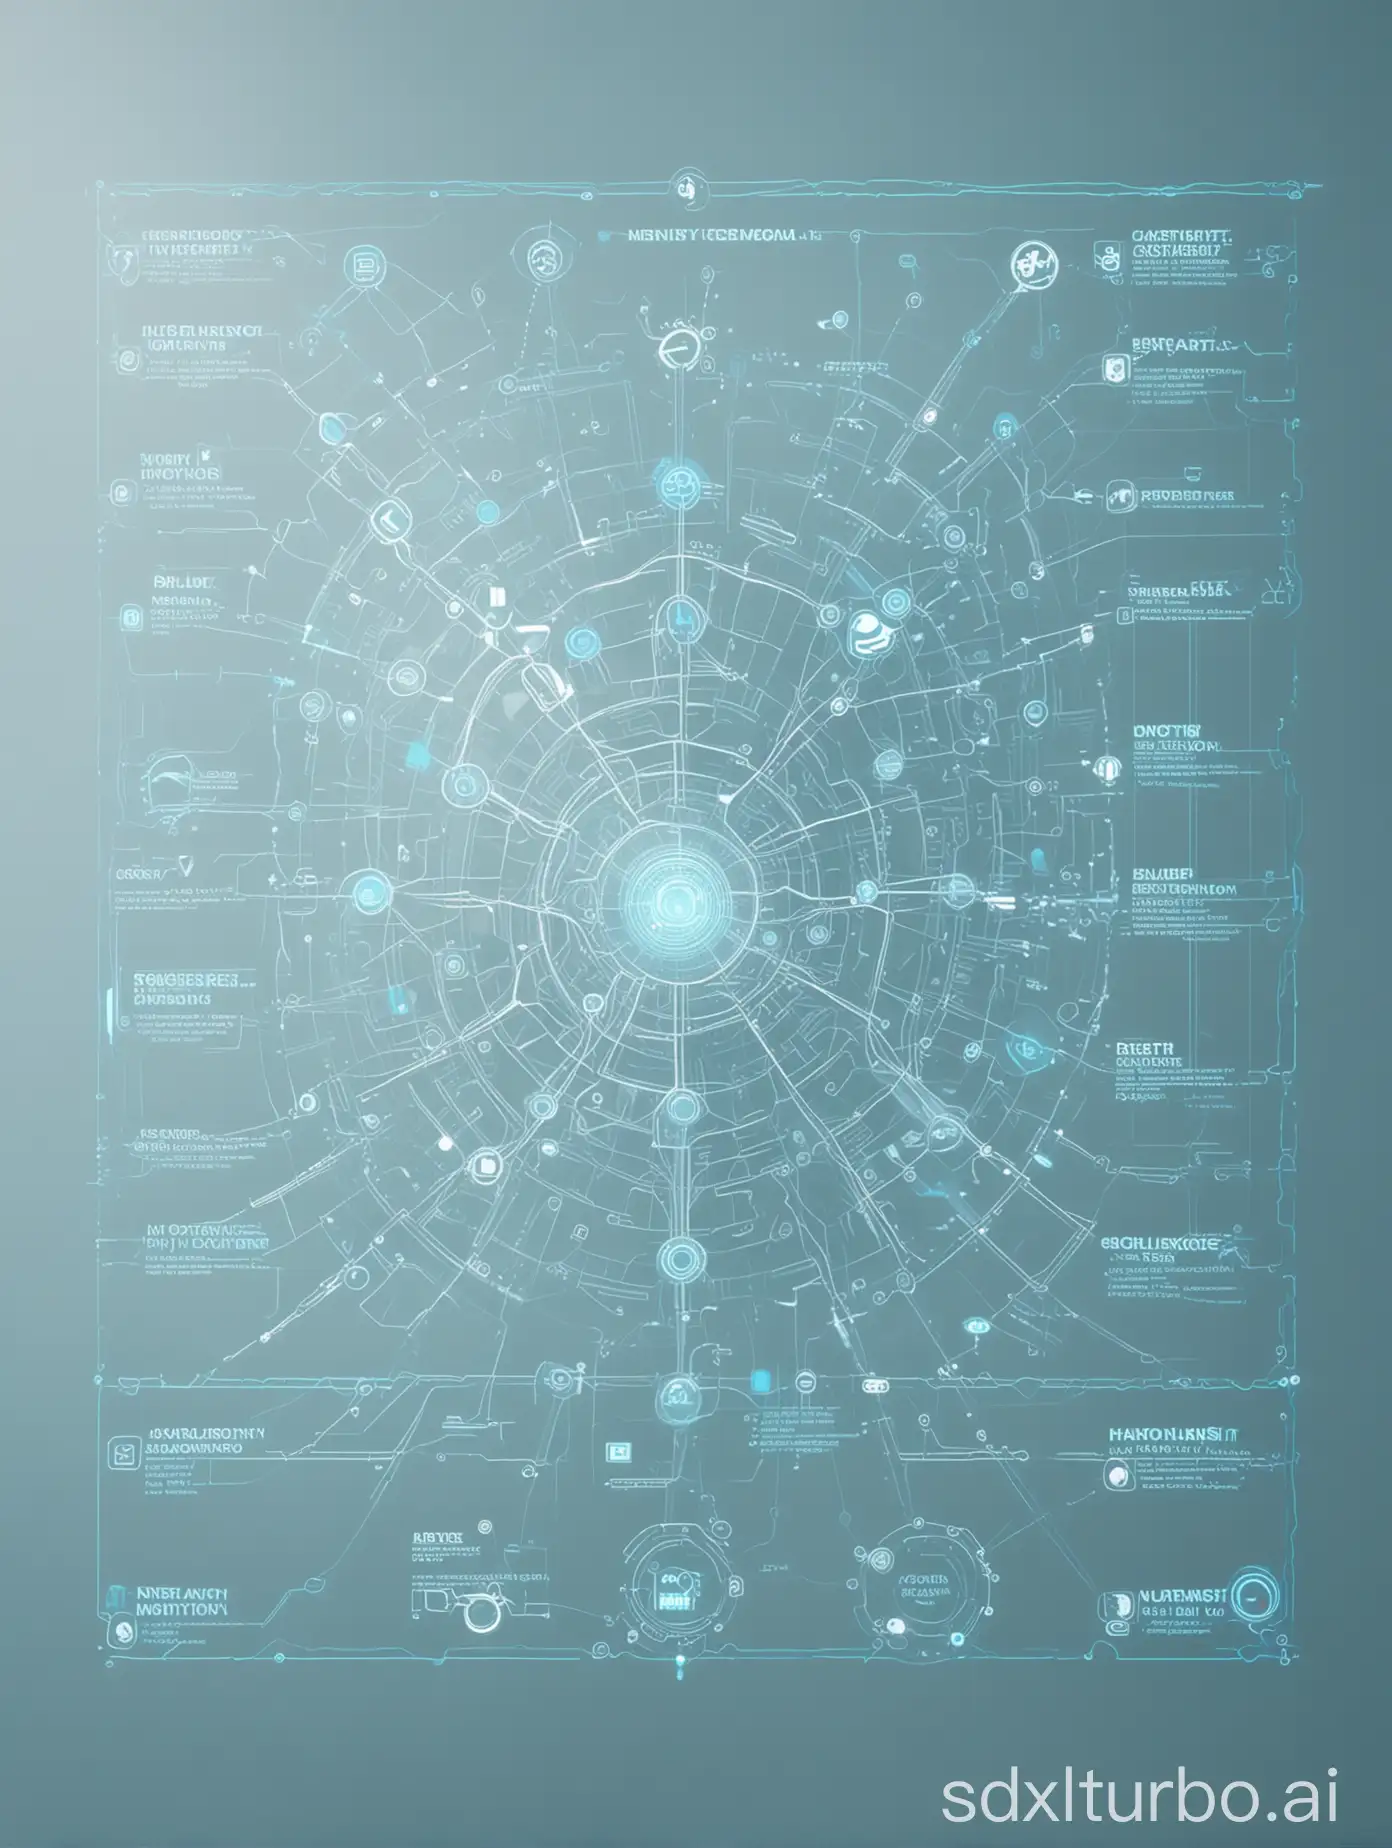 light blue colored, high tech feeling technology achievement transformation concept map